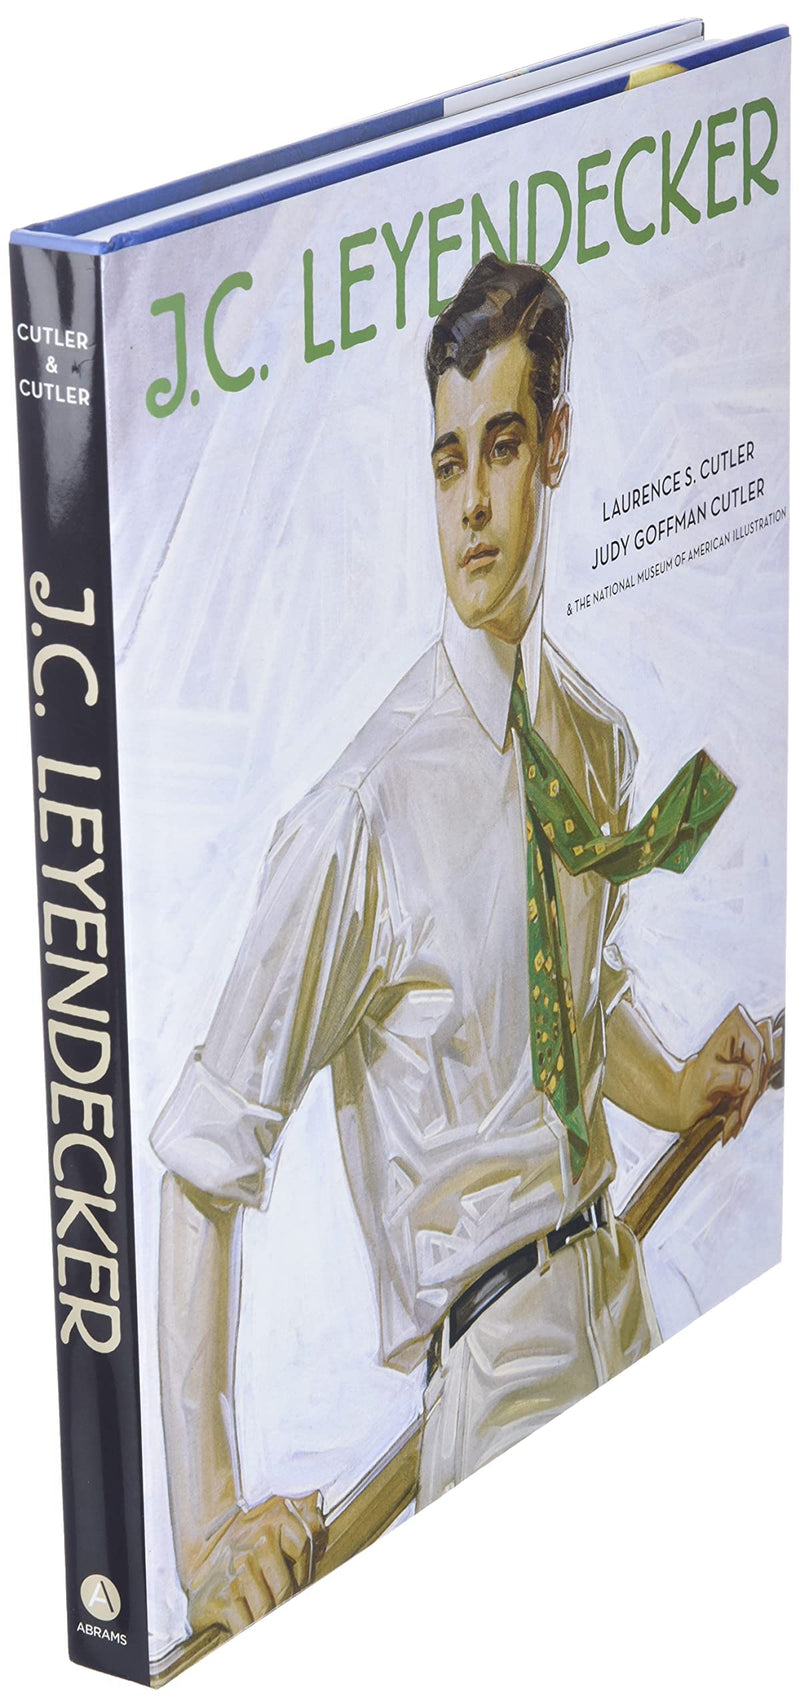 J C Leyendecker (Hardback) by Laurence S. Cutler & Judy Goffman Cutler